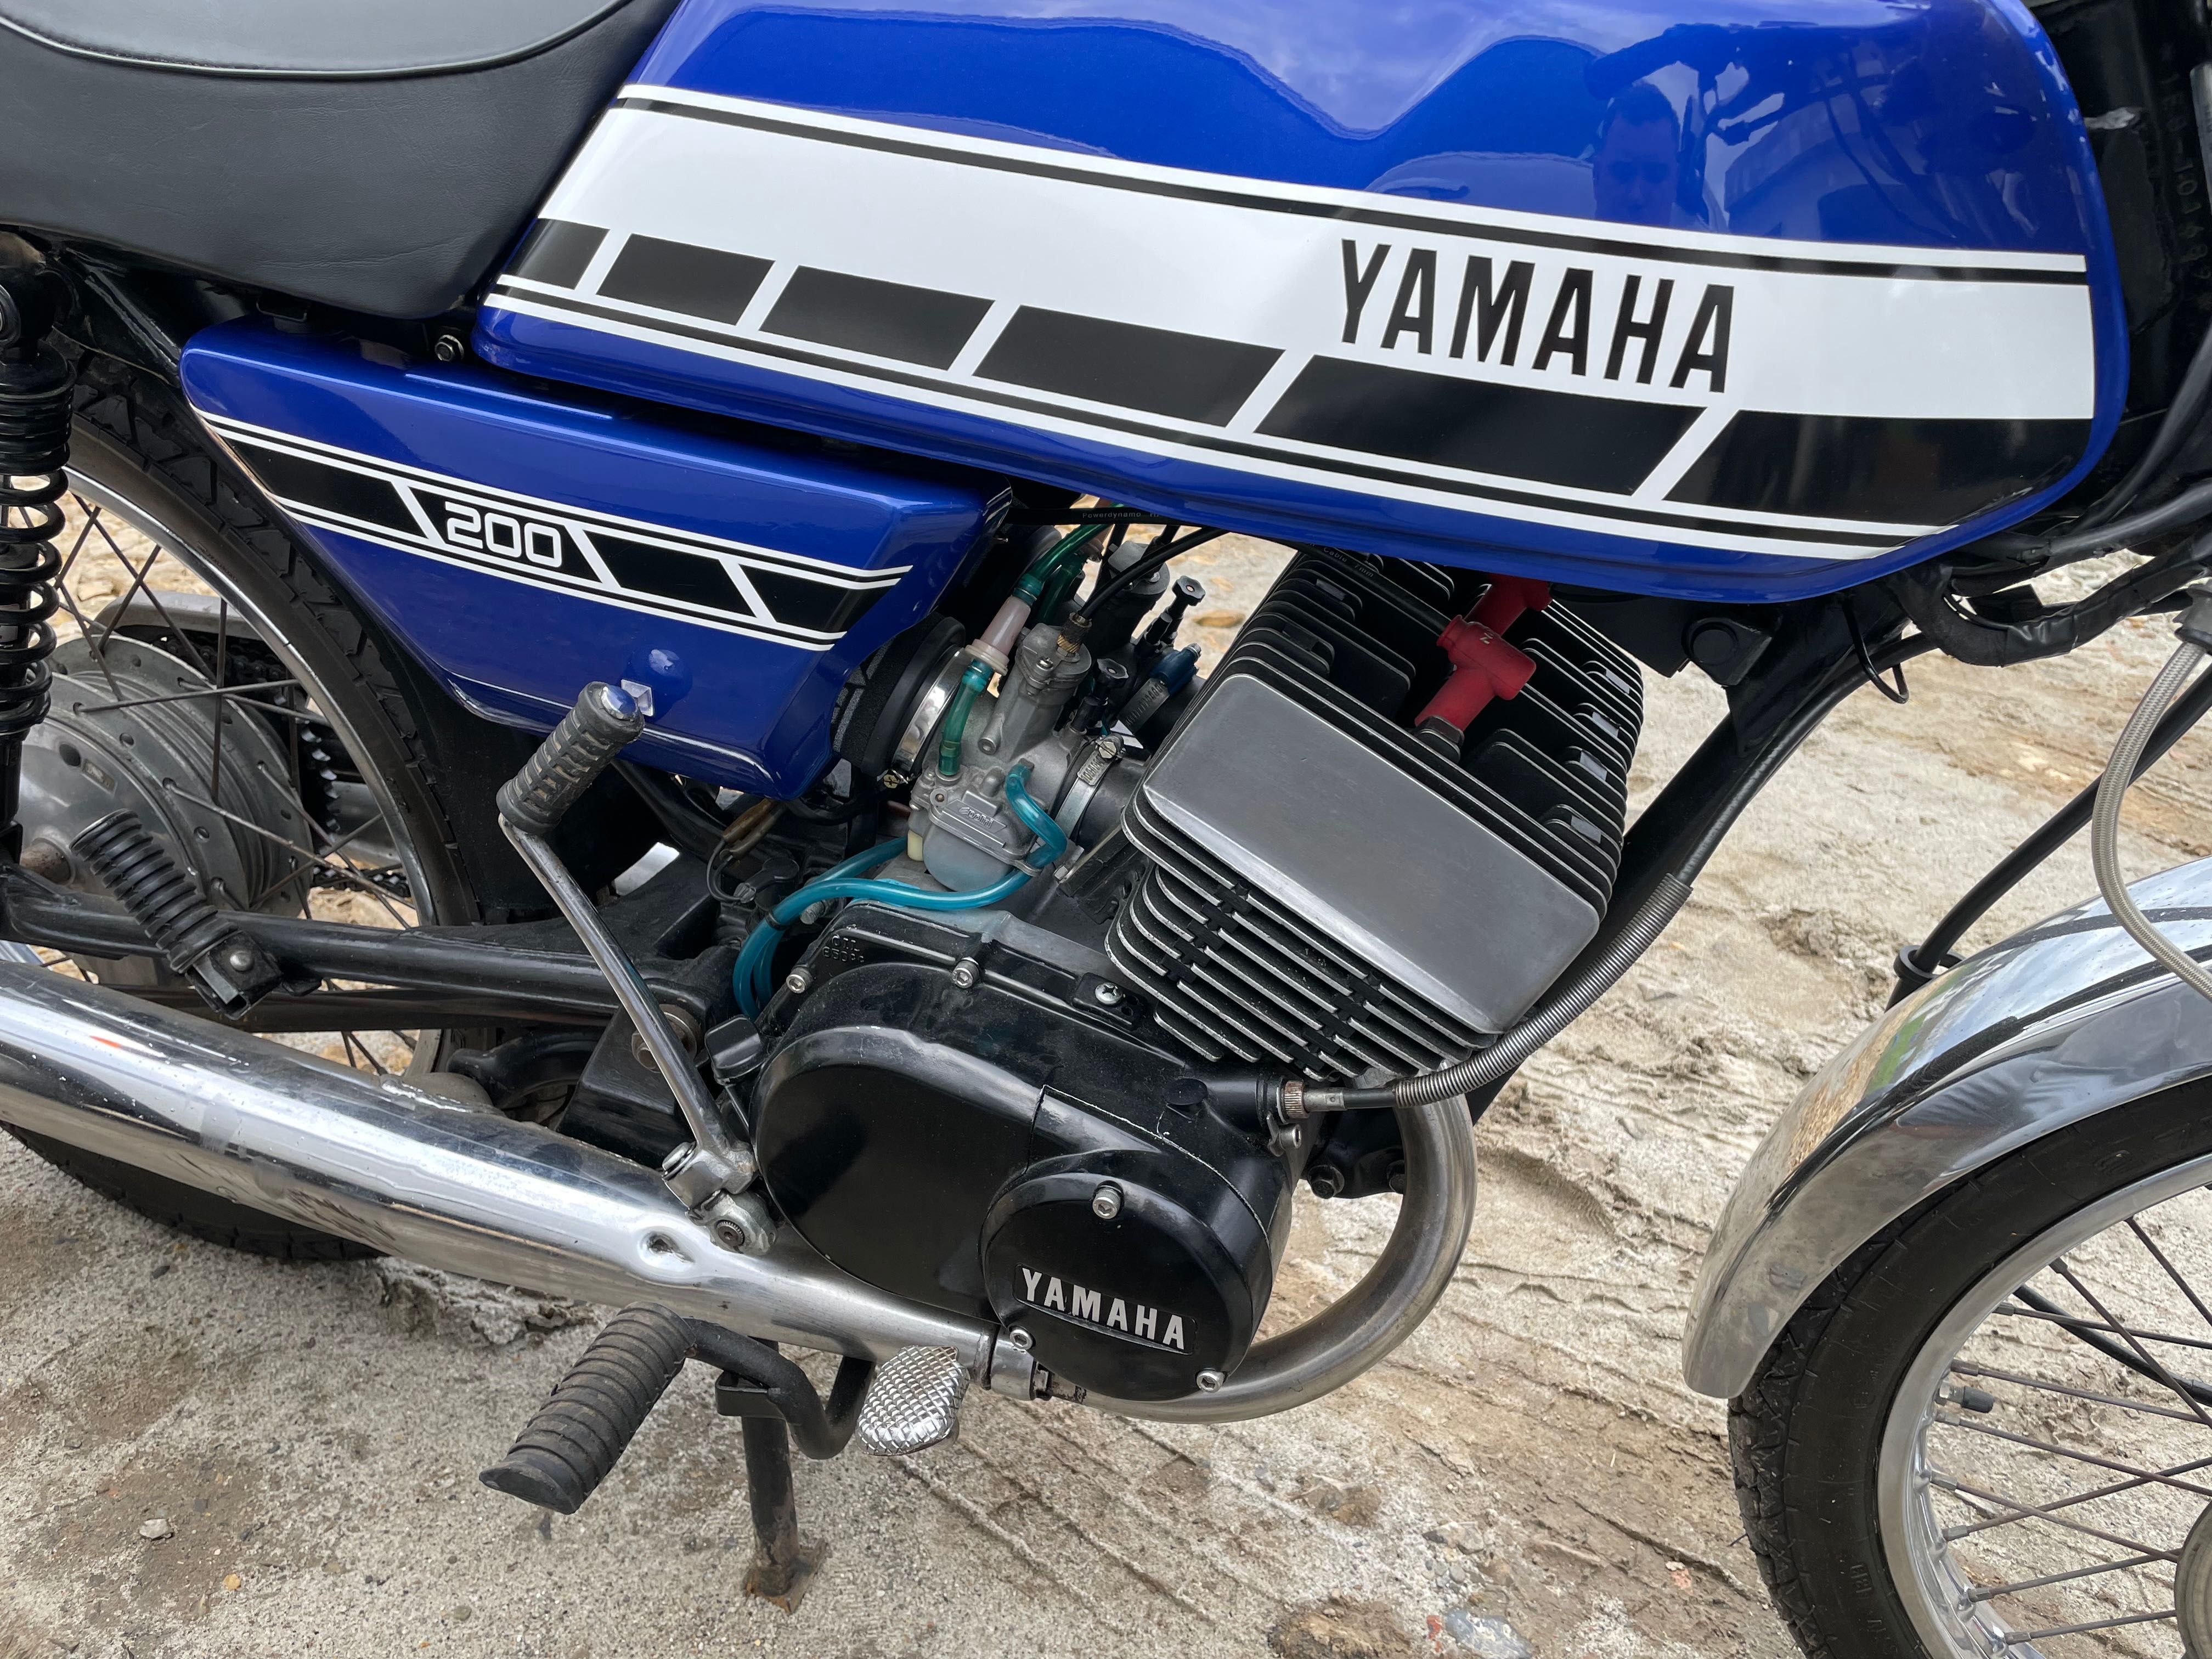 Yamaha RD200 Super klasyk  Zarejestrowana.